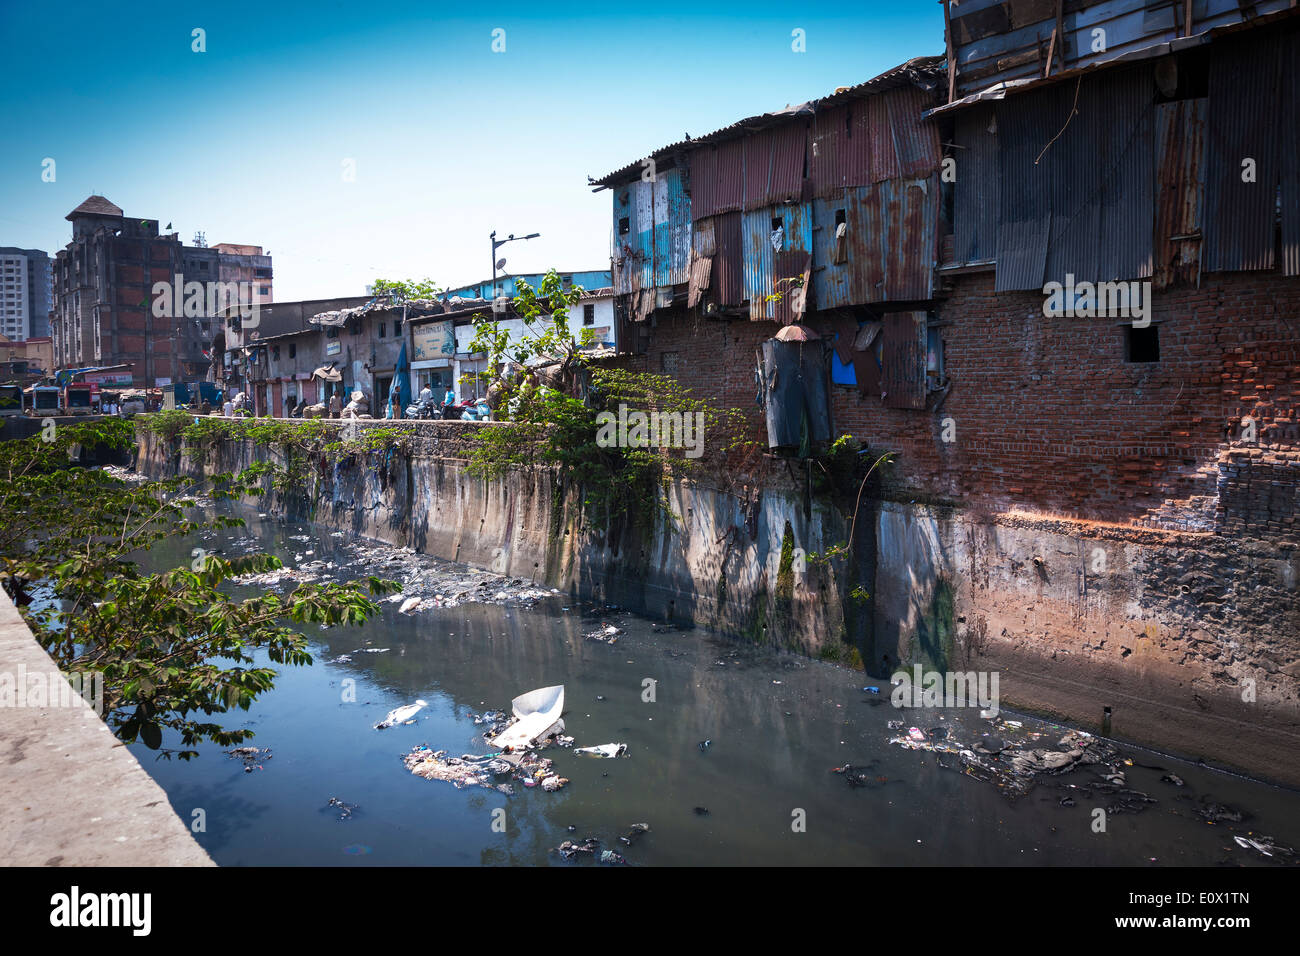 One Million people live in the 240 hectare Dharavi Slum, Mumbai India. Stock Photo